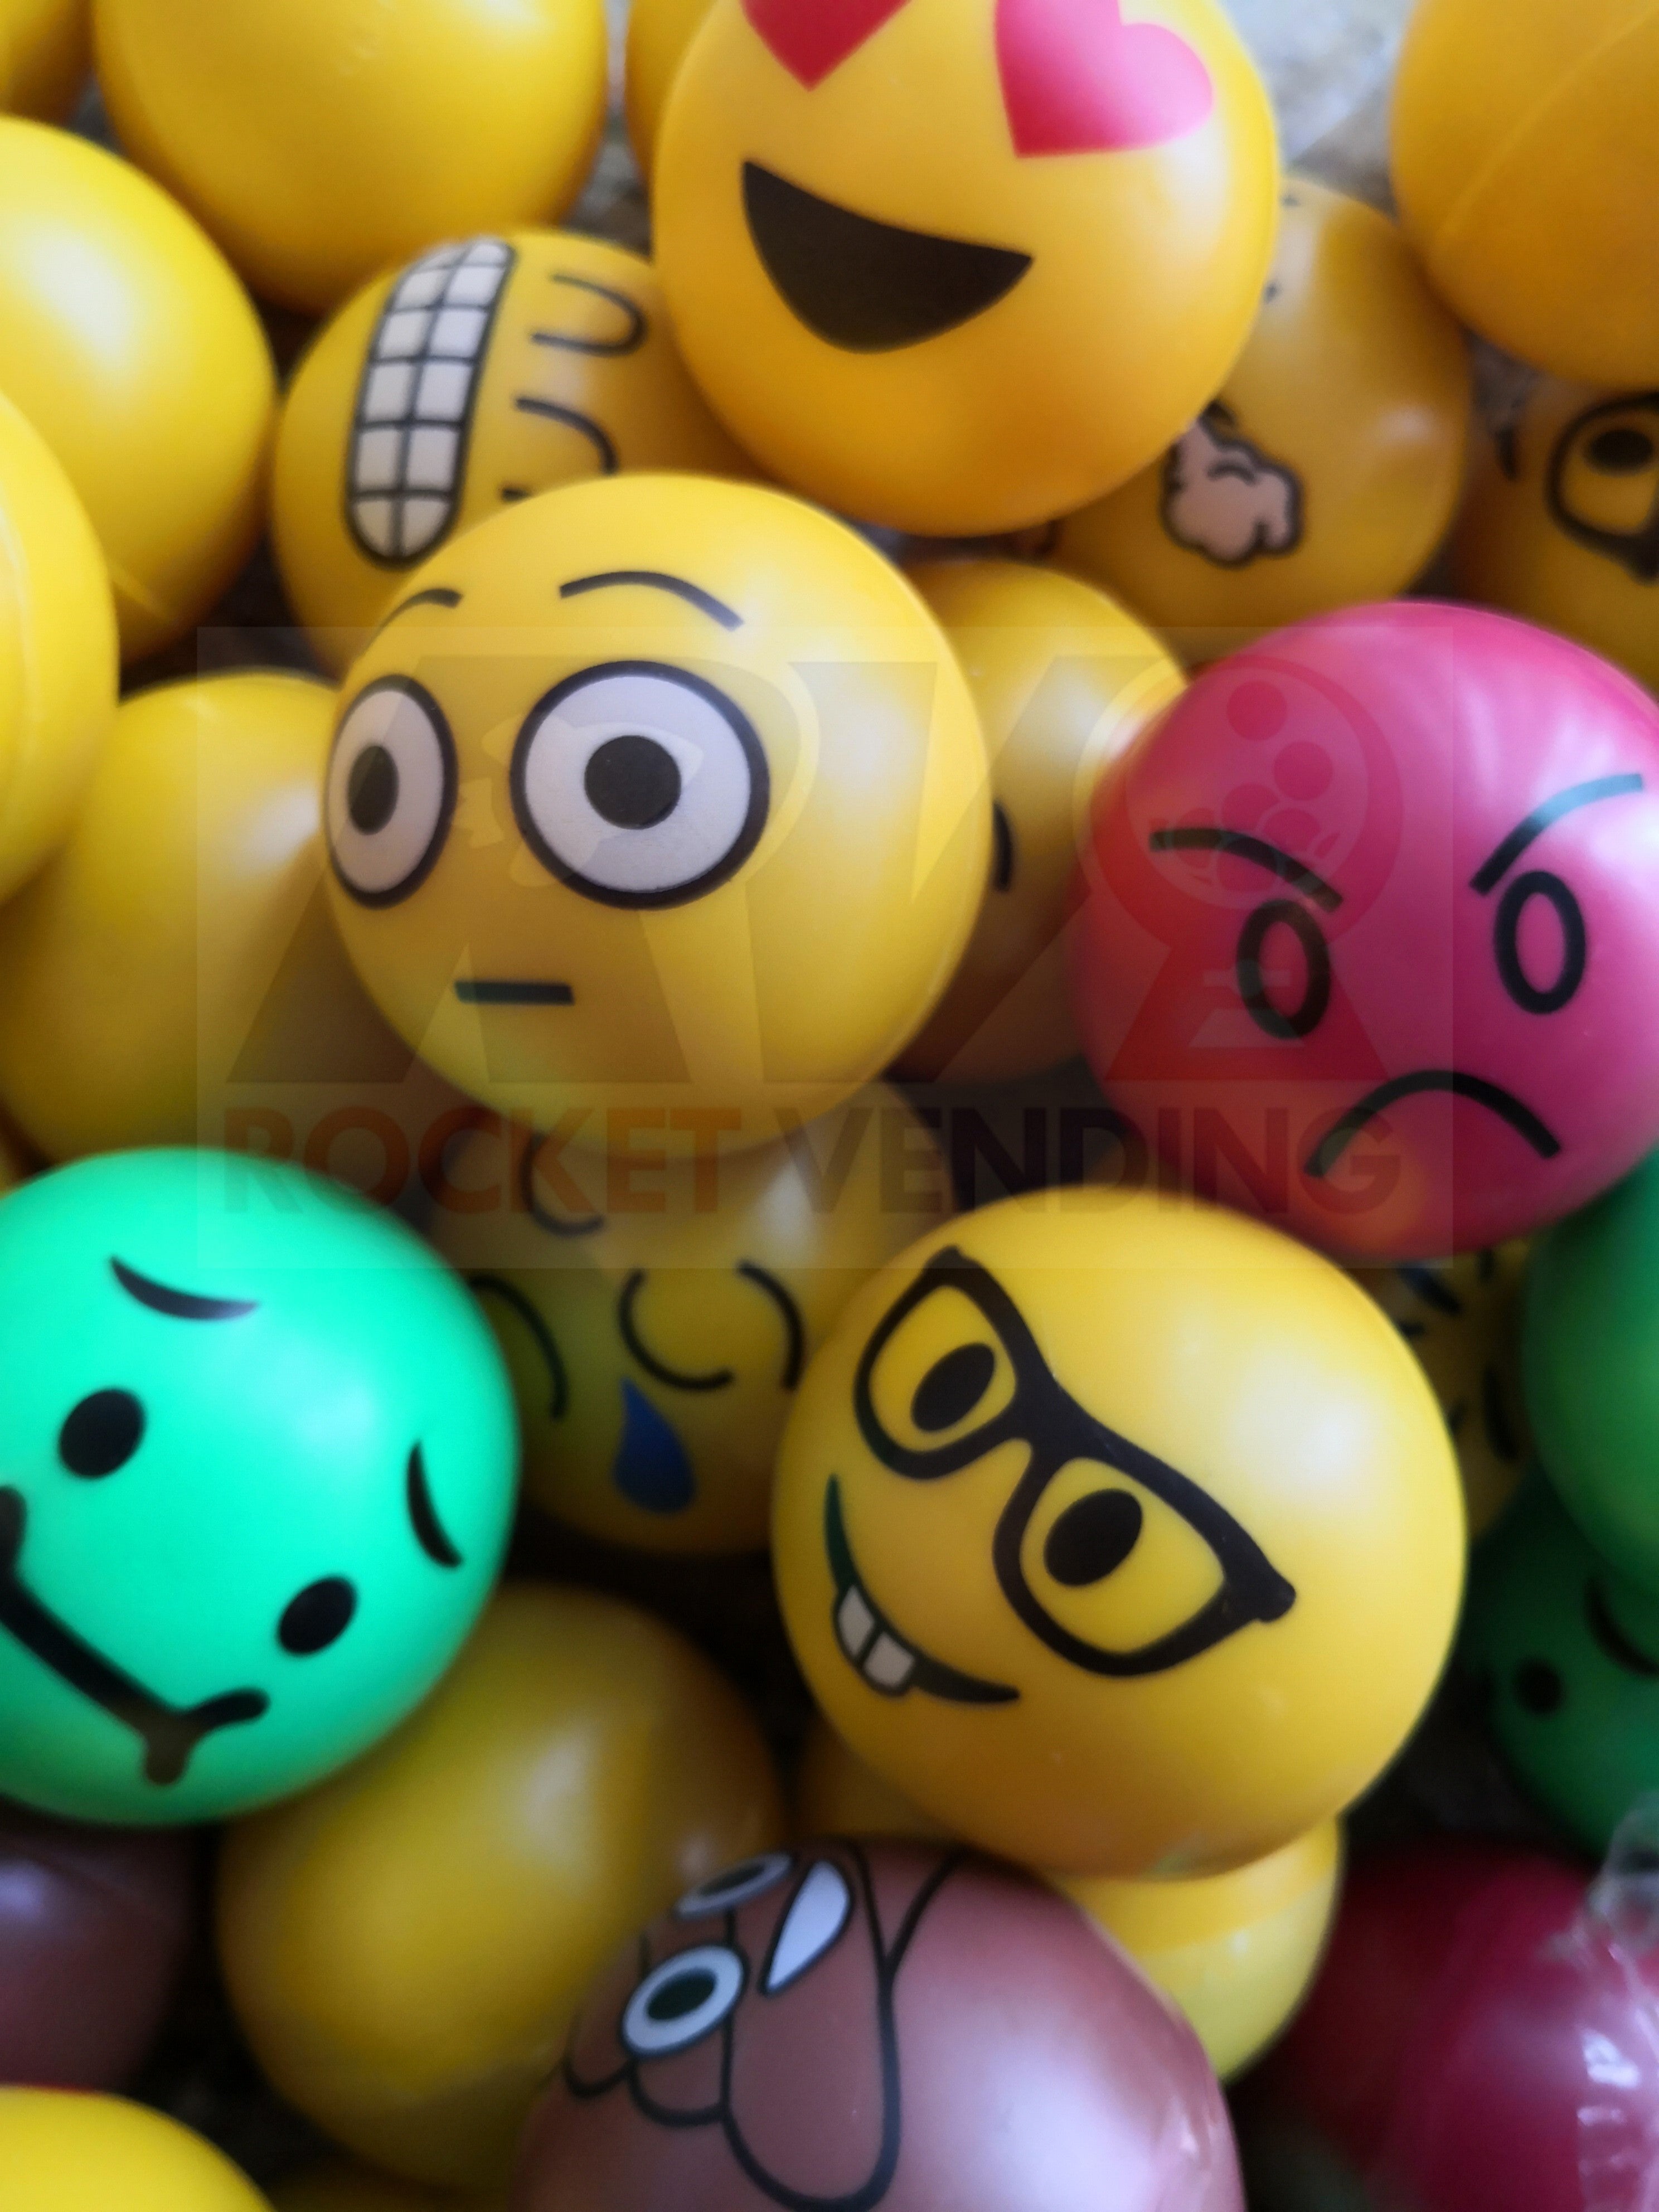 500 Pelota Emoji En 49 Mm 2 Pulgadas  Hueca Rebota 2p - Rocket Vending Todo en Chicleras